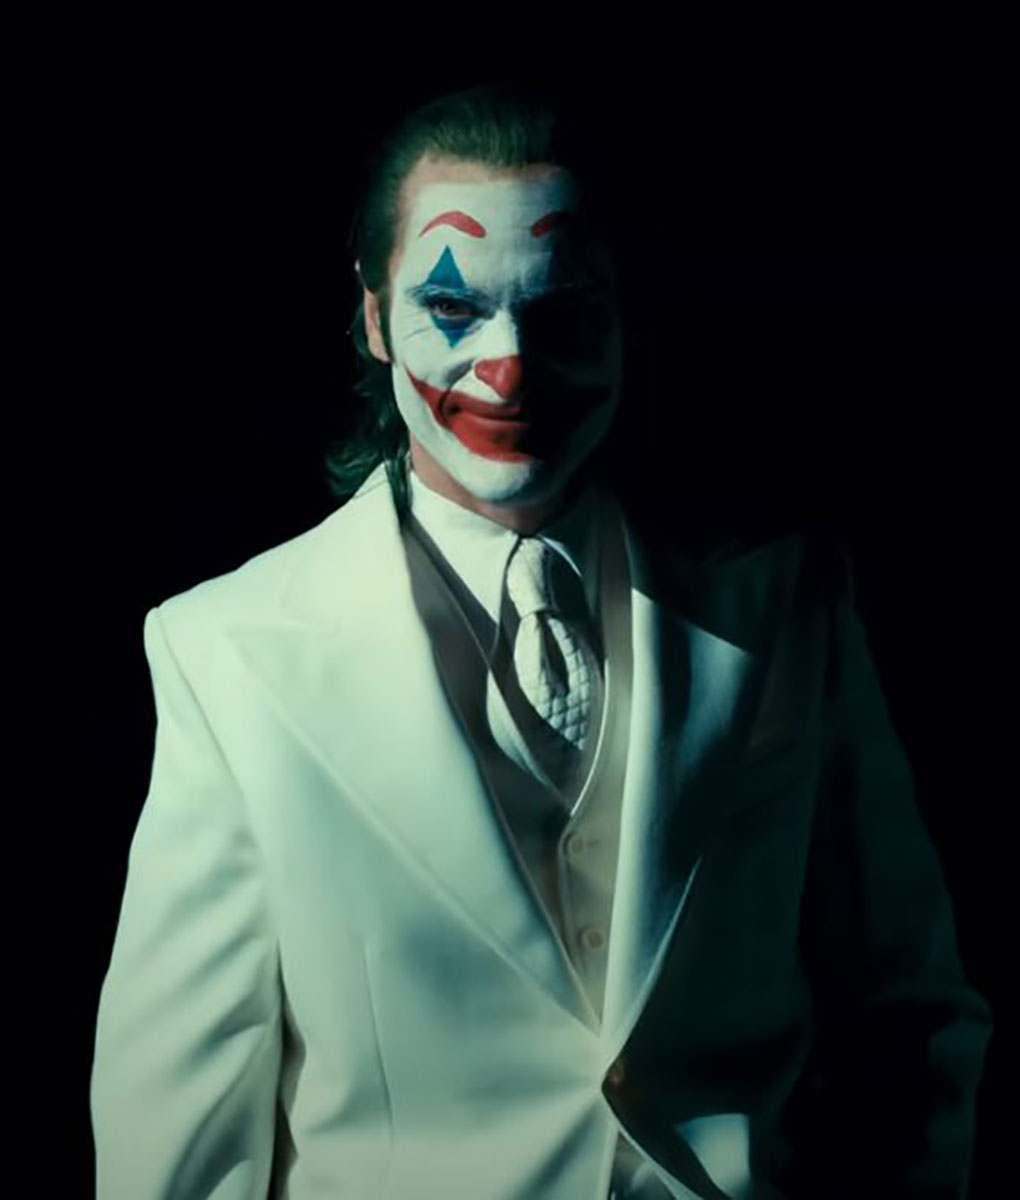 Joaquin Phoenix Joker Folie à Deux Blazer (3)